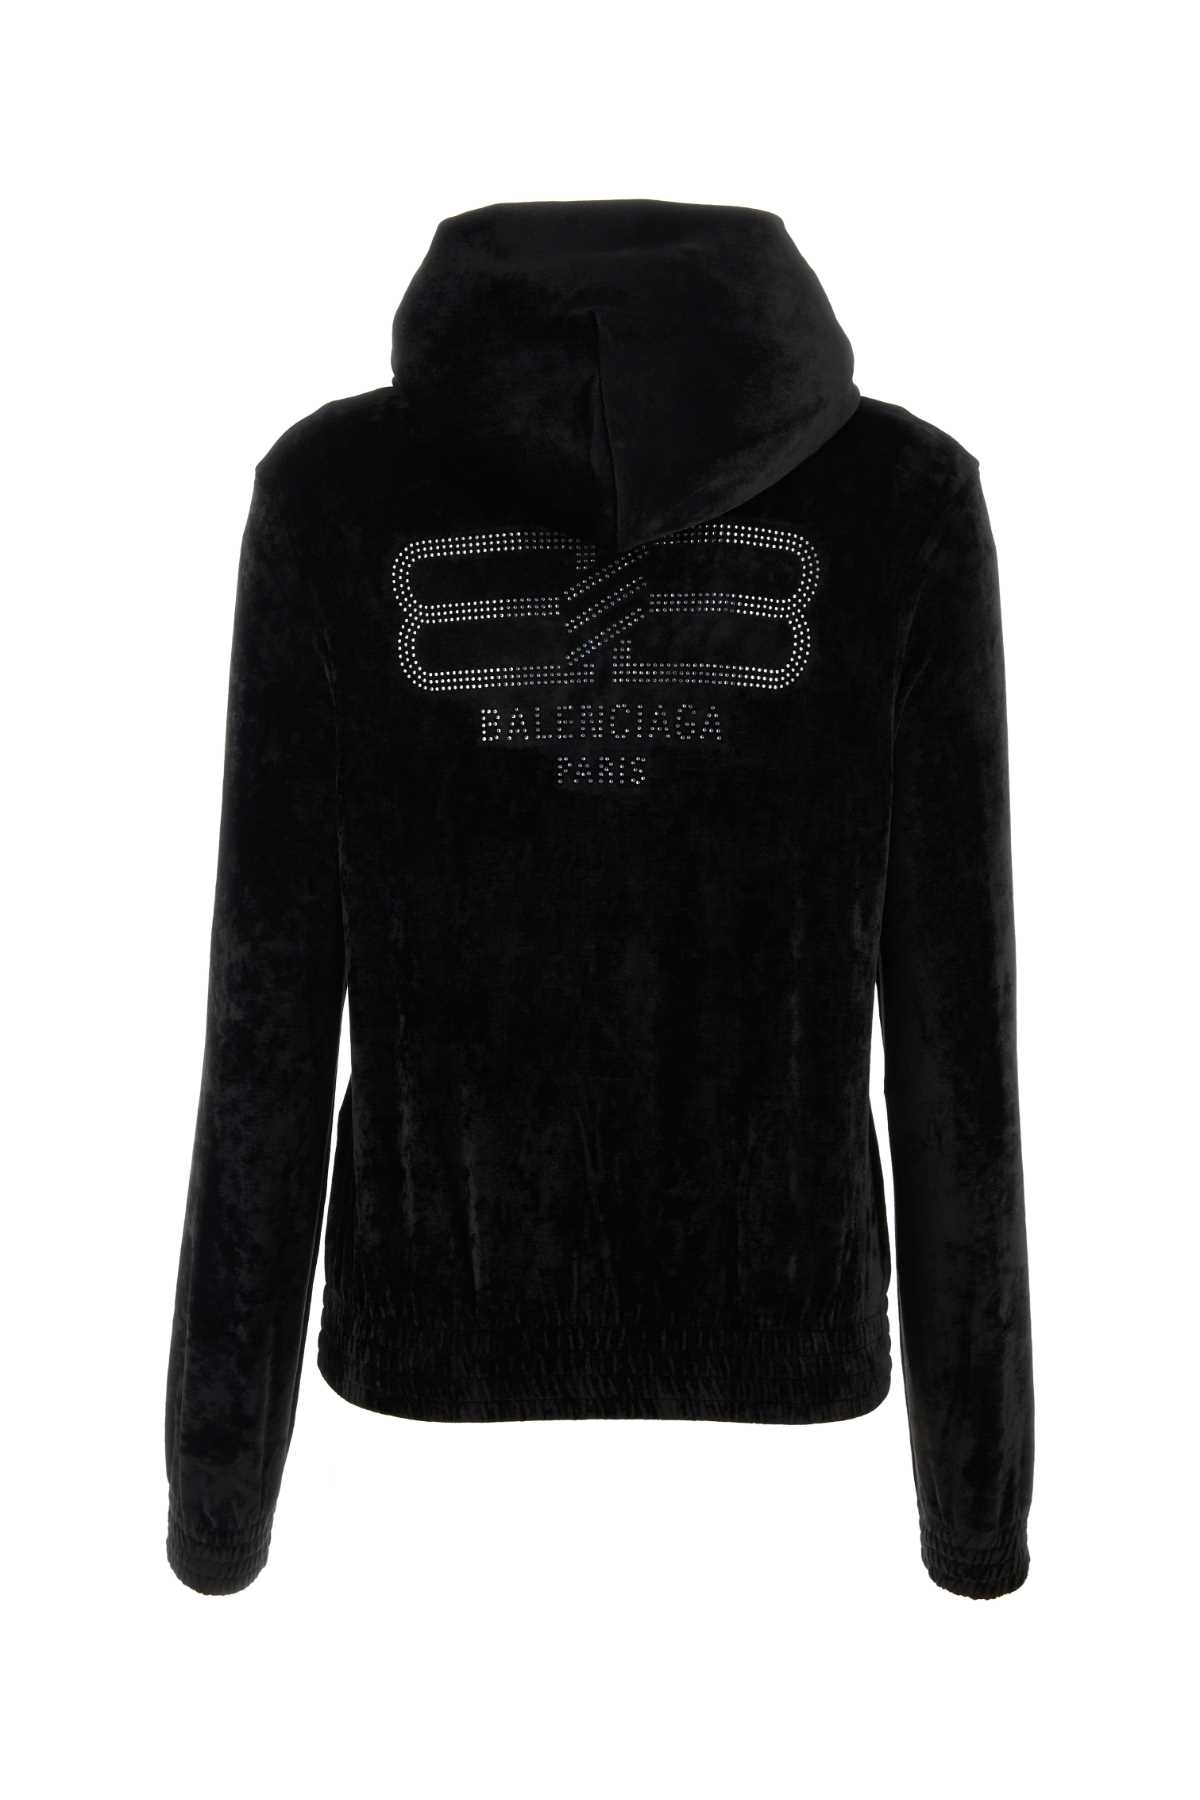 Balenciaga Black Velvet Sweatshirt In 1000